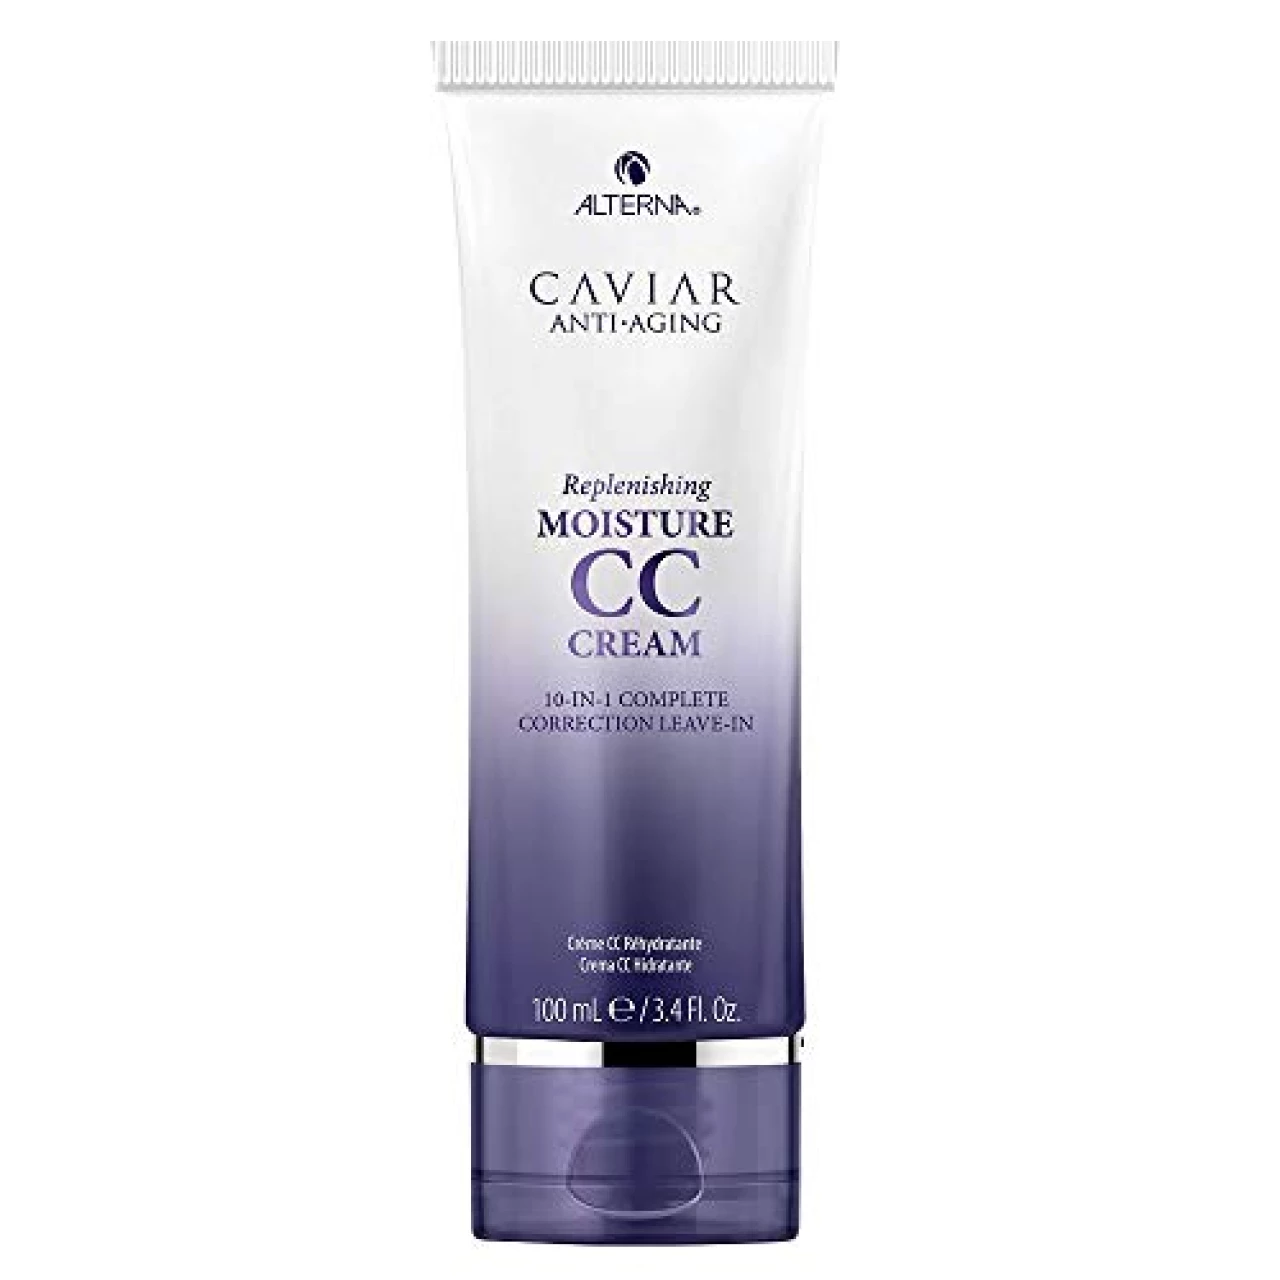 Alterna Caviar Anti-Aging Replenishing Moisture CC Cream, 3.4 Ounce (Pack of 1)